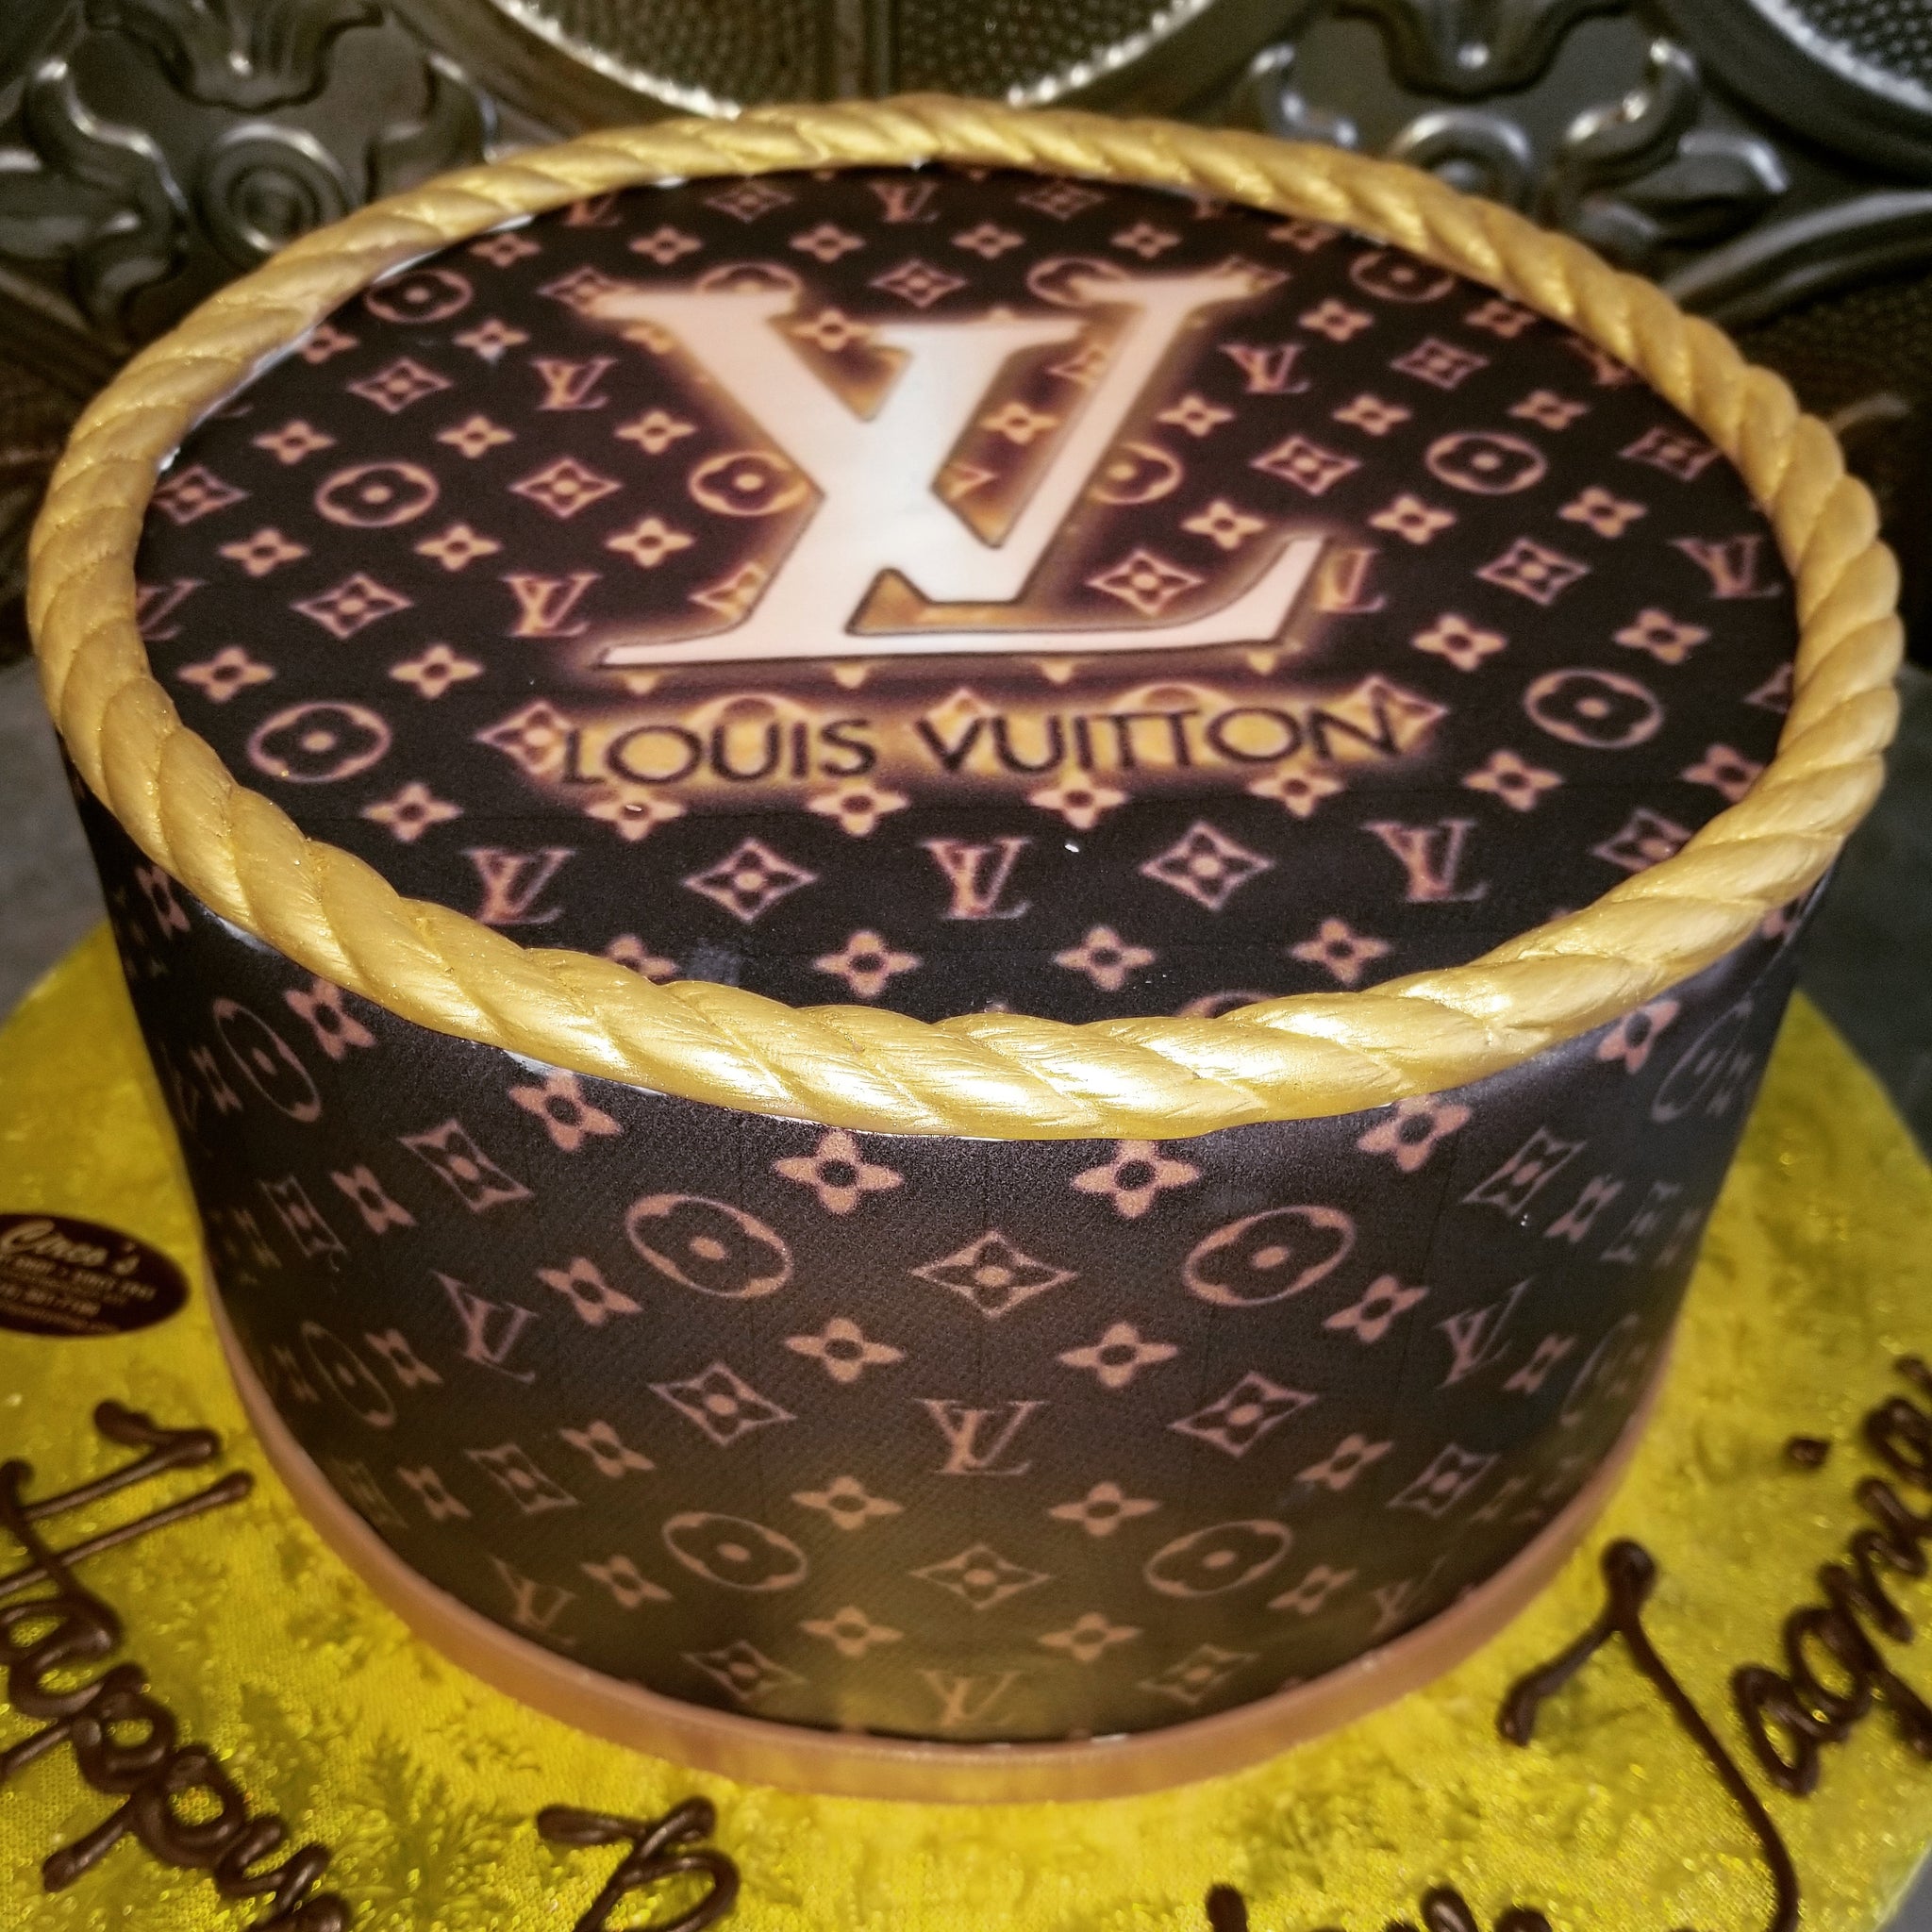 Louis Vuitton Cake, Louis Vuitton Cake - based on a design …